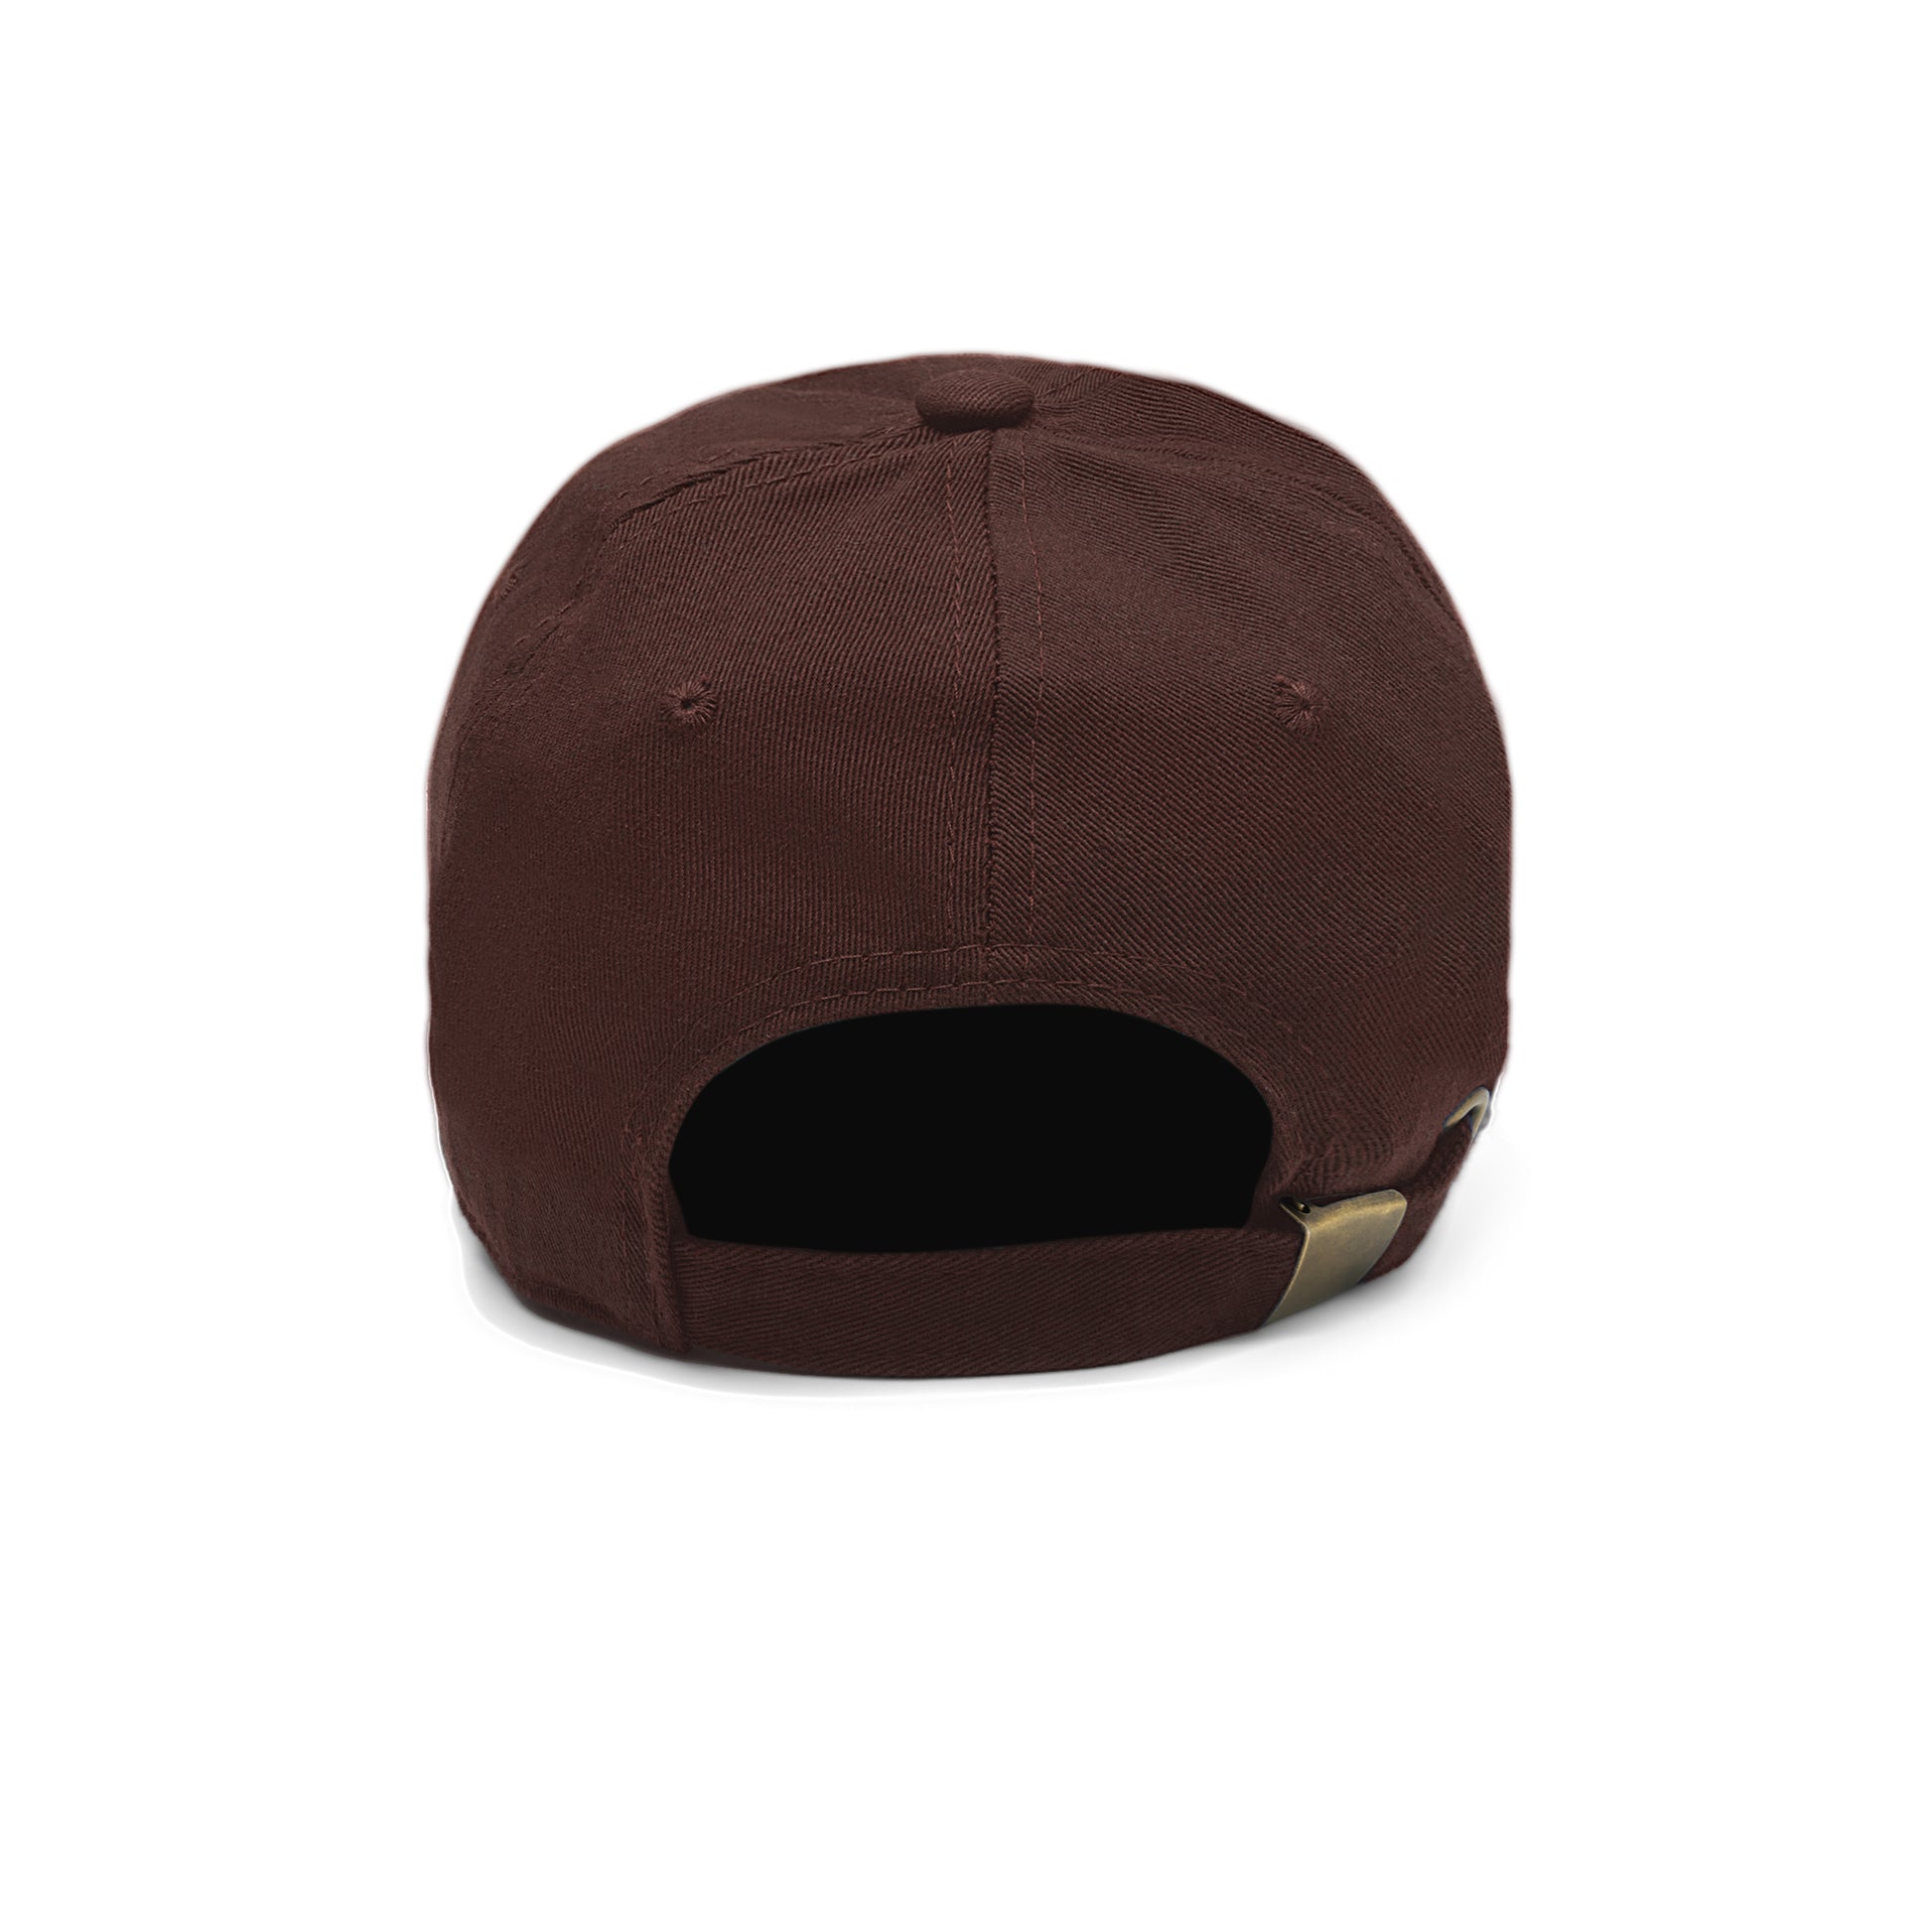 back brown back of hat with adjustable metal buckle